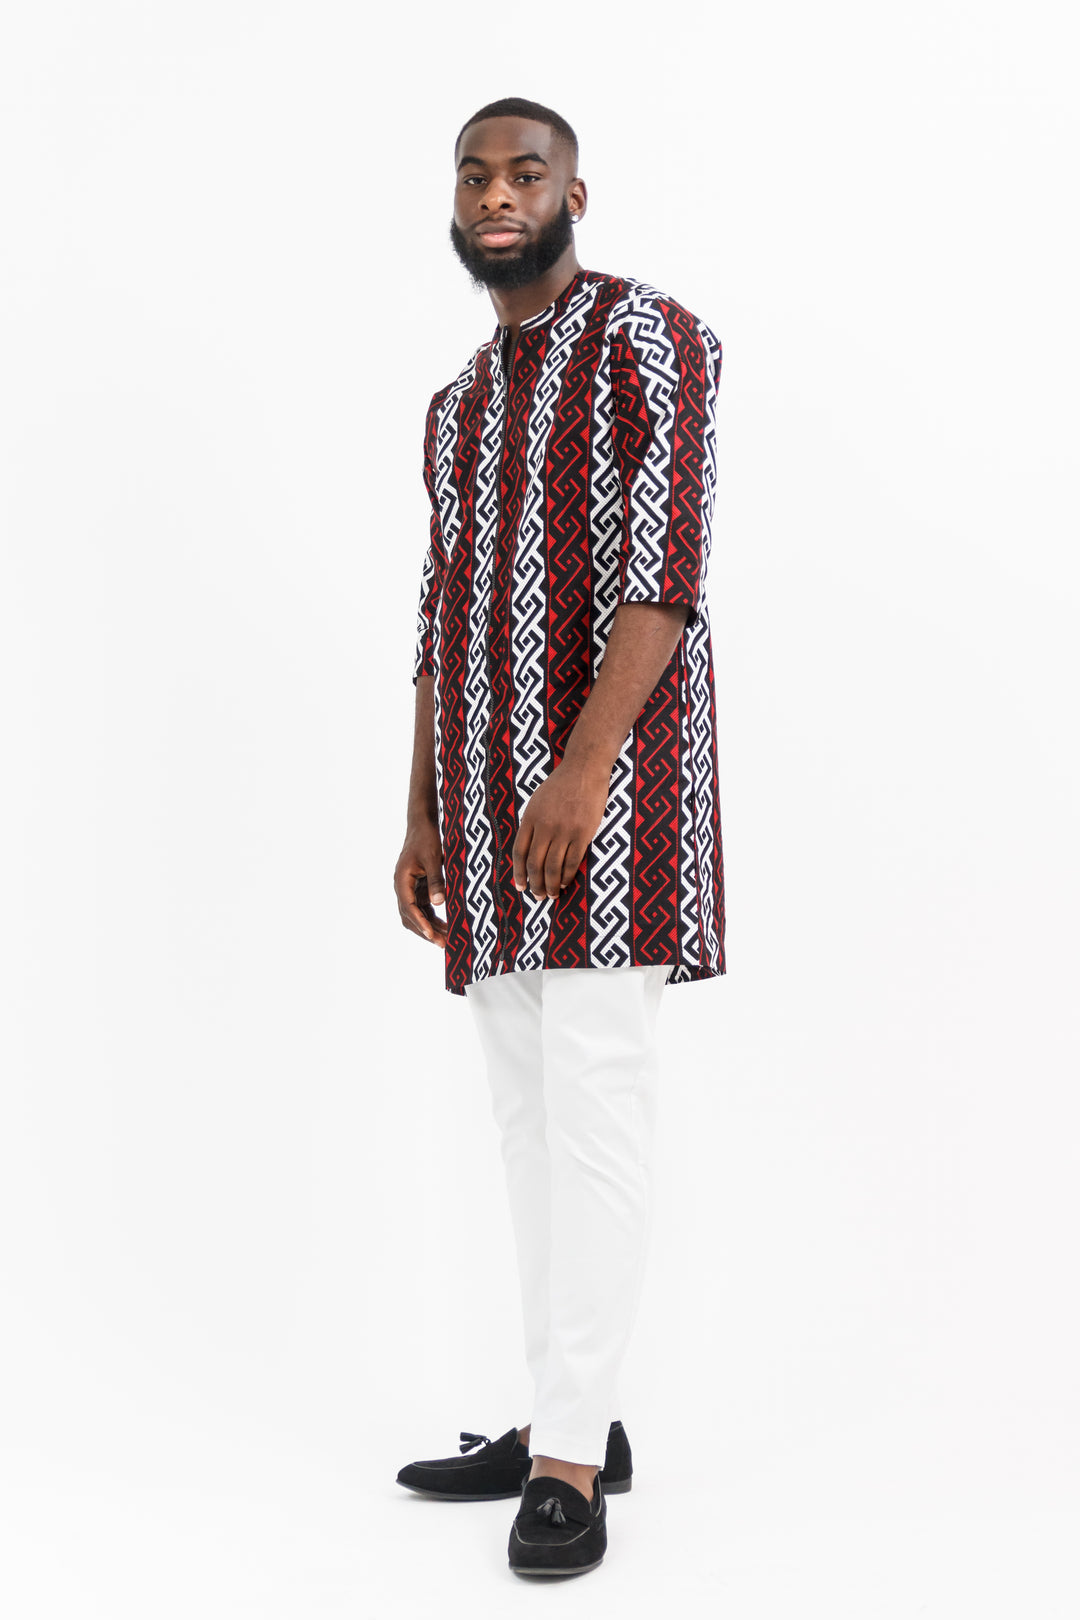 ZANKWA Short Sleeve Zip Shirt | African Print Shirt